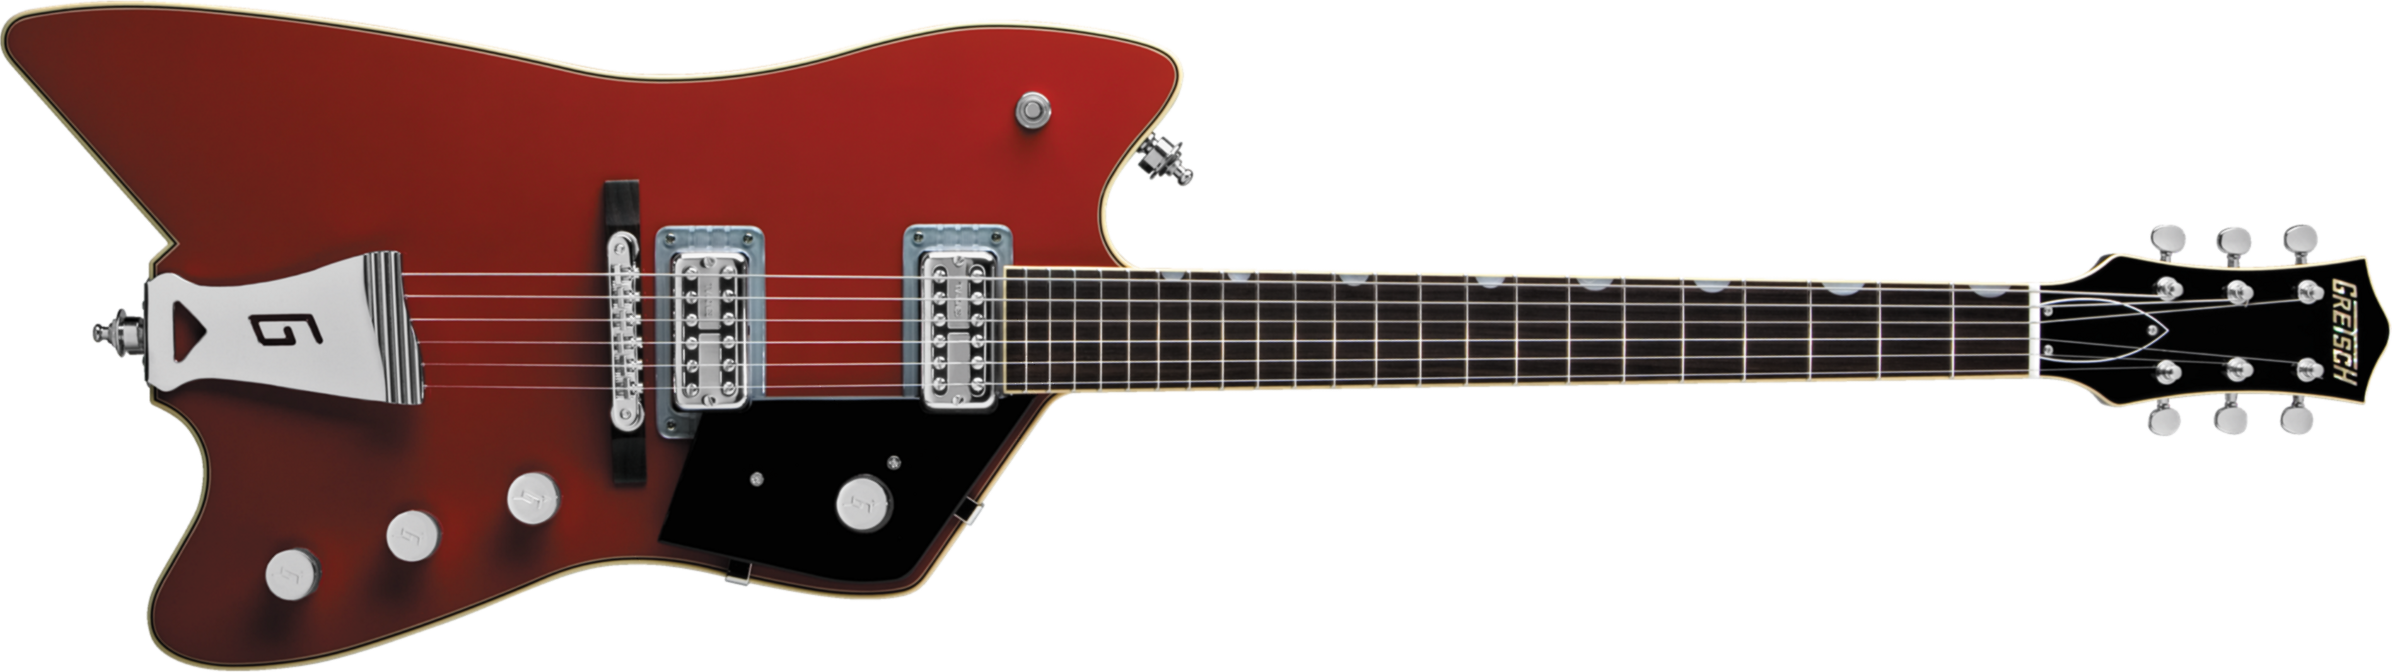 Gretsch G6199 Billy-bo - Firebird Red - Retro-rock elektrische gitaar - Main picture